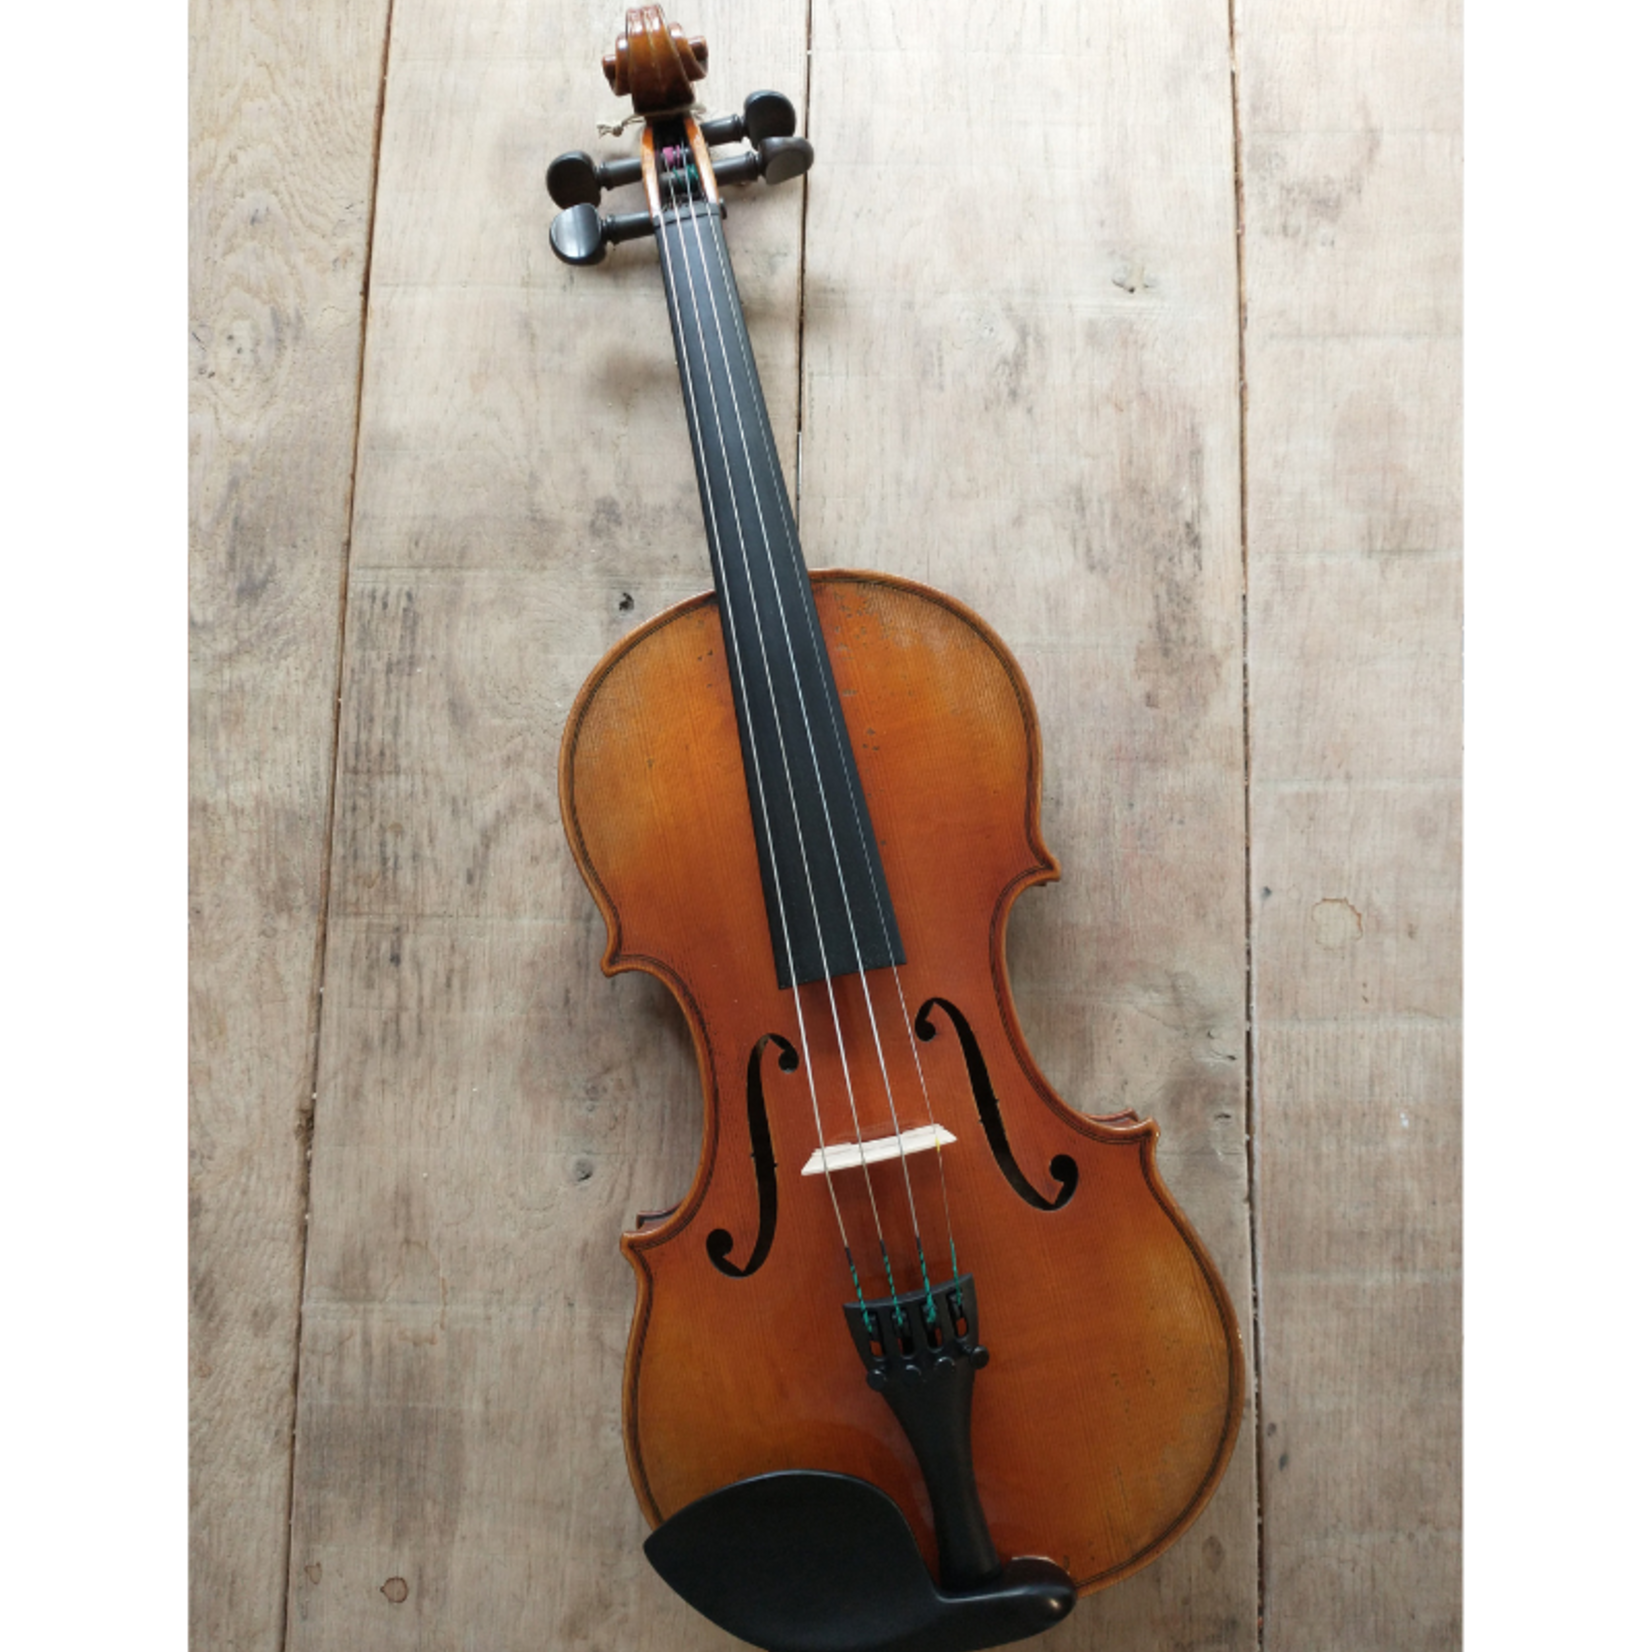 ADVANCED Delille, viool 4/4“ (1742 ) La Lutherie d’art “ Deluxe” Antique -  Del Gesu 1742 model